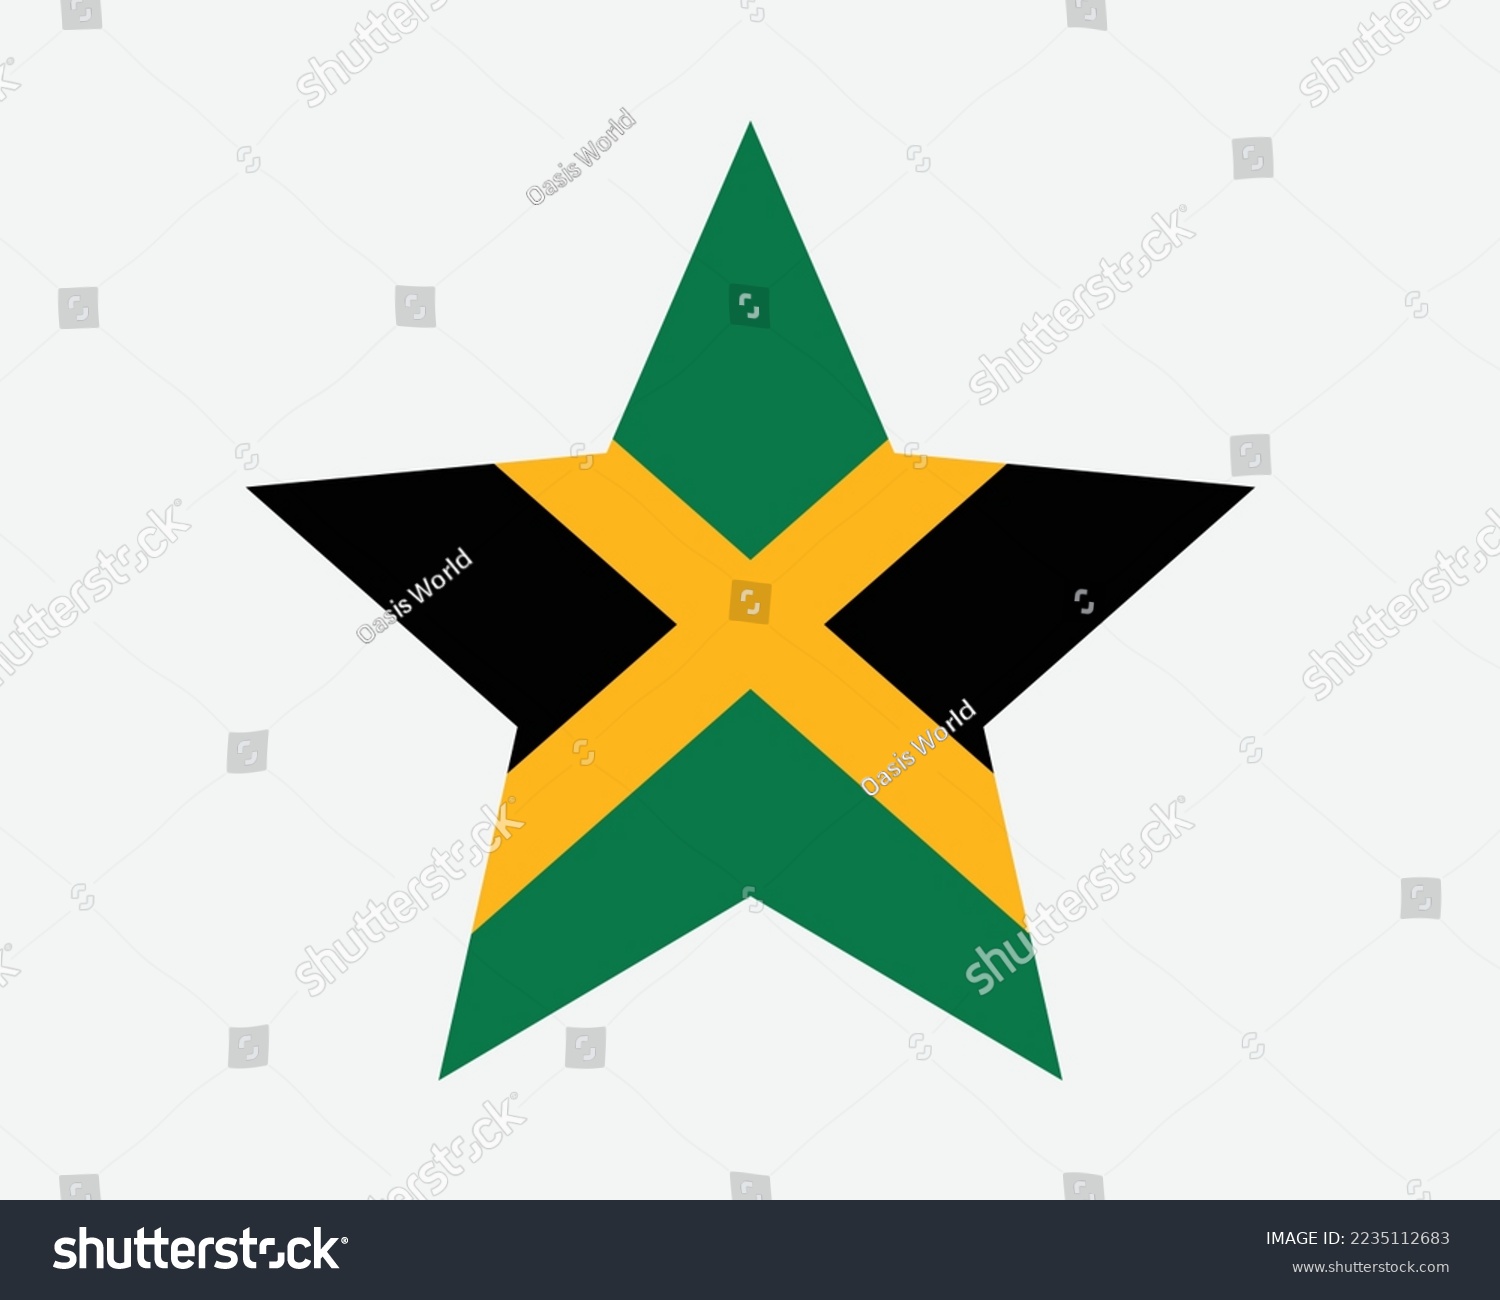 SVG of Jamaica Star Flag. Jamaican Star Shape Flag. Country National Banner Icon Symbol Vector Flat Artwork Graphic Illustration svg